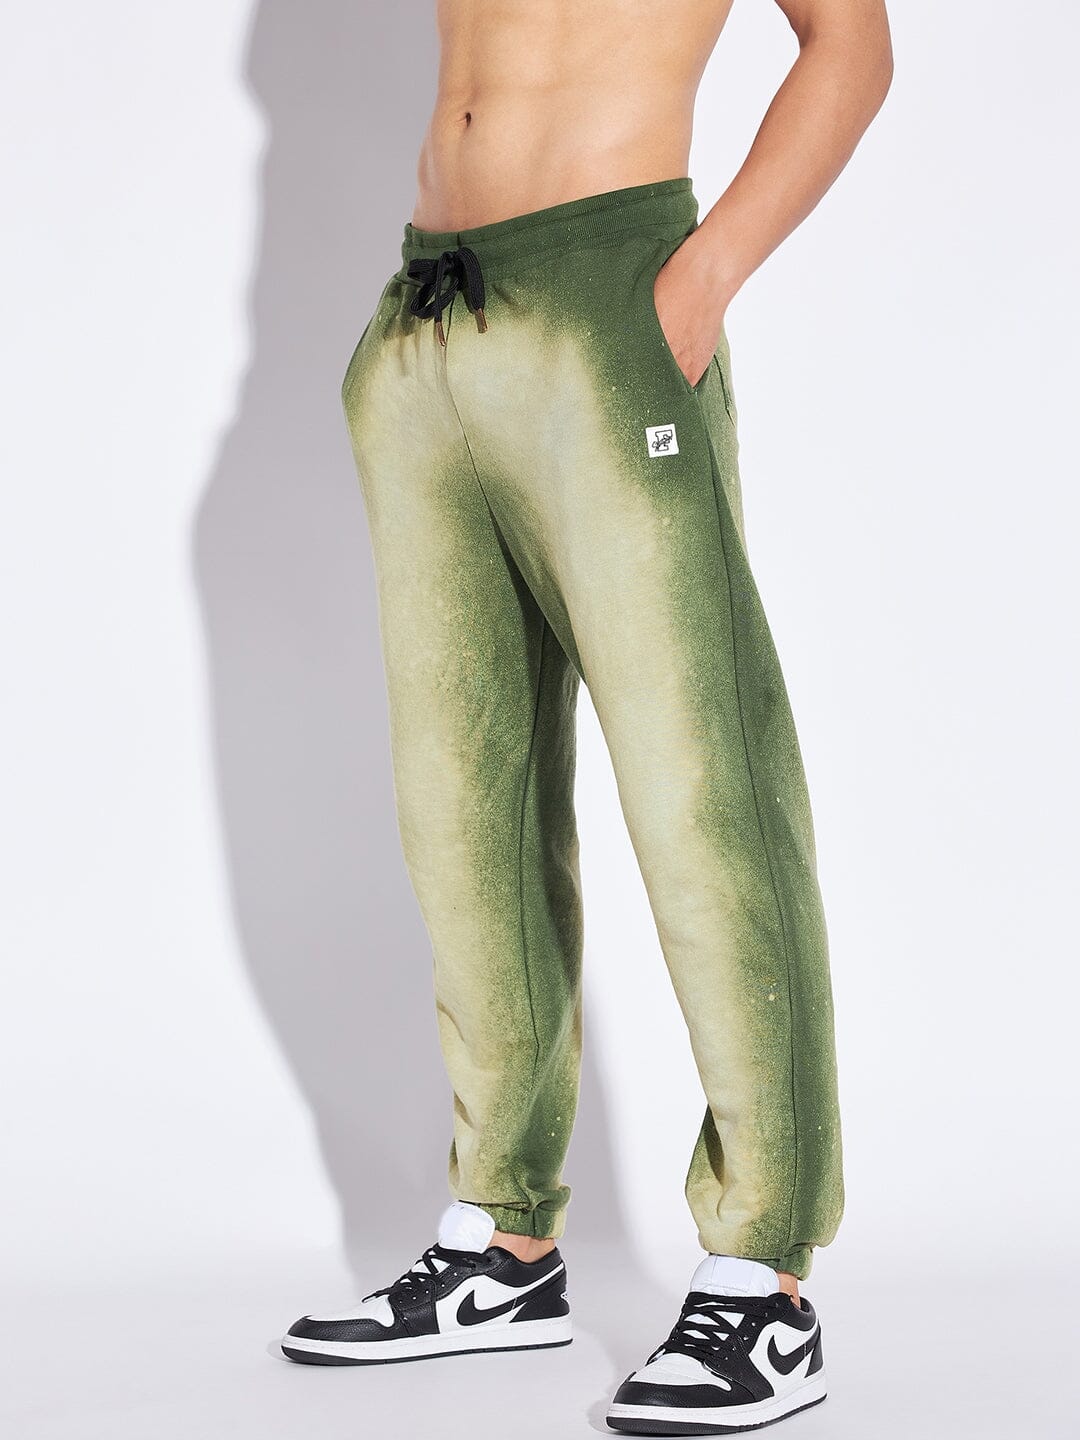 Aayomet Sweatpants For Men Jogger Men's Casual Track Pants Classic Loose Fit  Open Bottom Elastic Waist Drawstring Closure Jogger Pants with Zippered  Pockets,Green XXL - Walmart.com